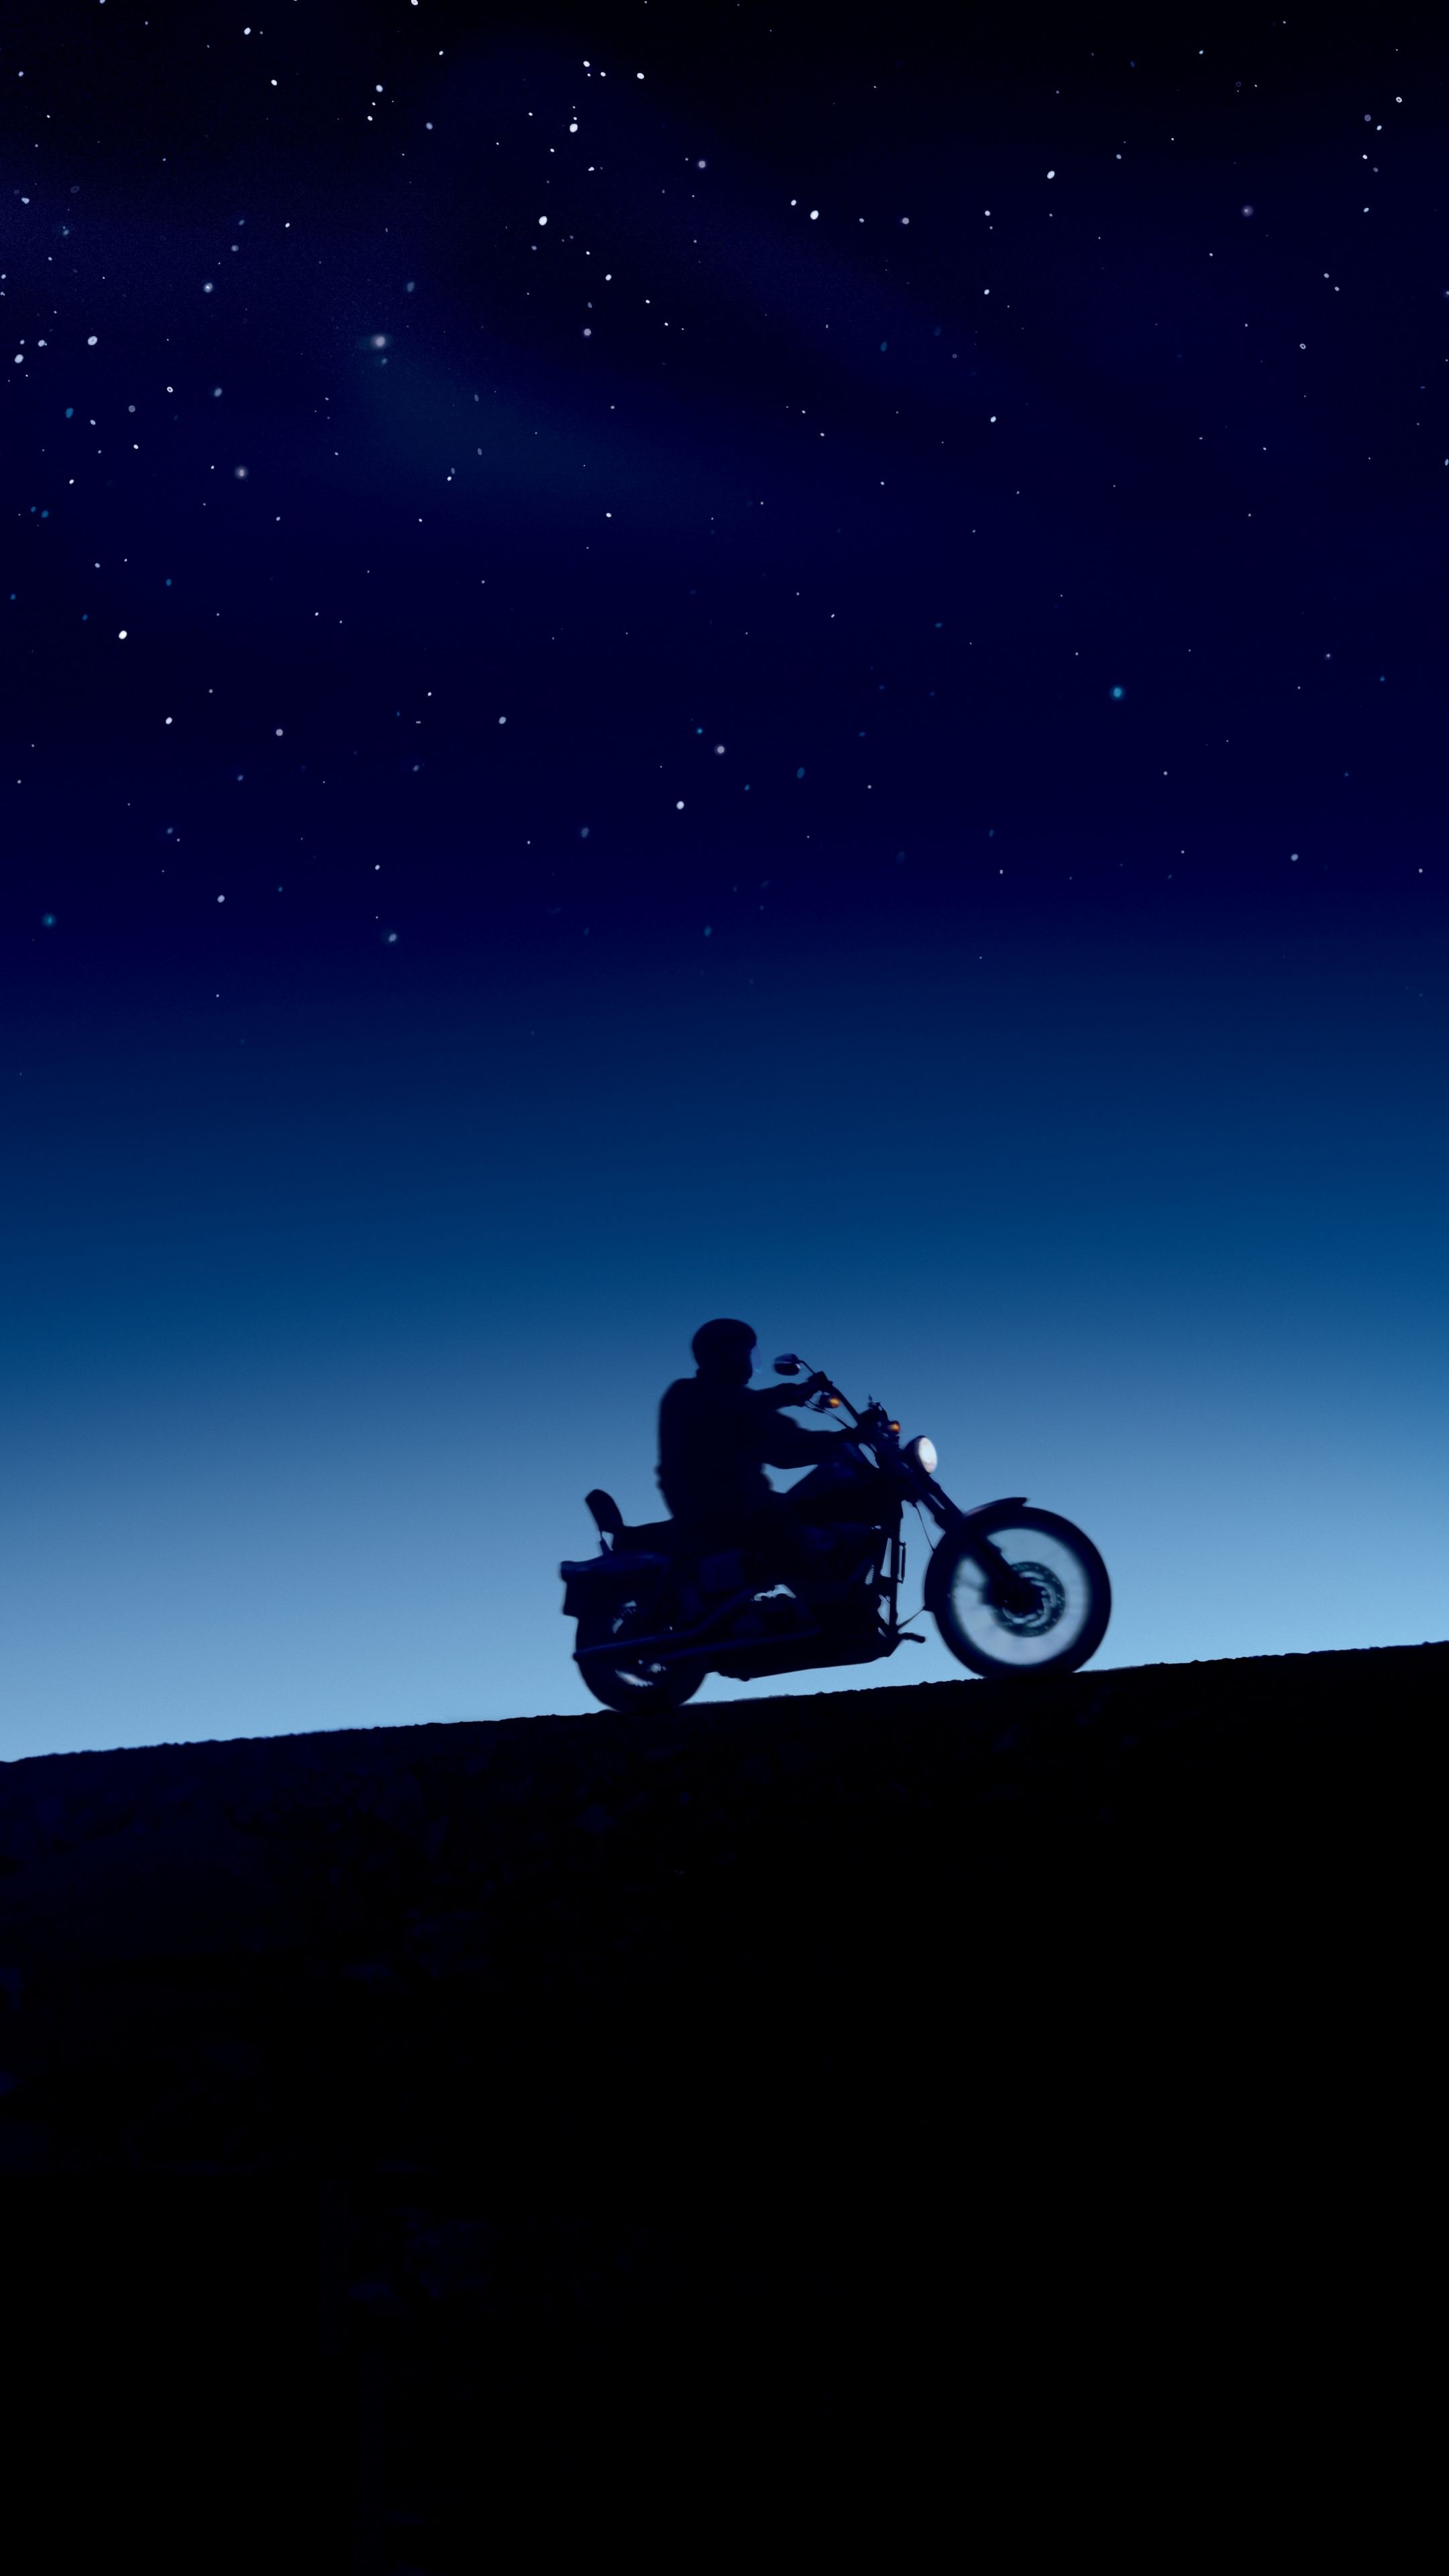 Evening, bike ride, silhouette, sunset wallpaper. Bike ride, Sunset wallpaper, Motorcycle wallpaper